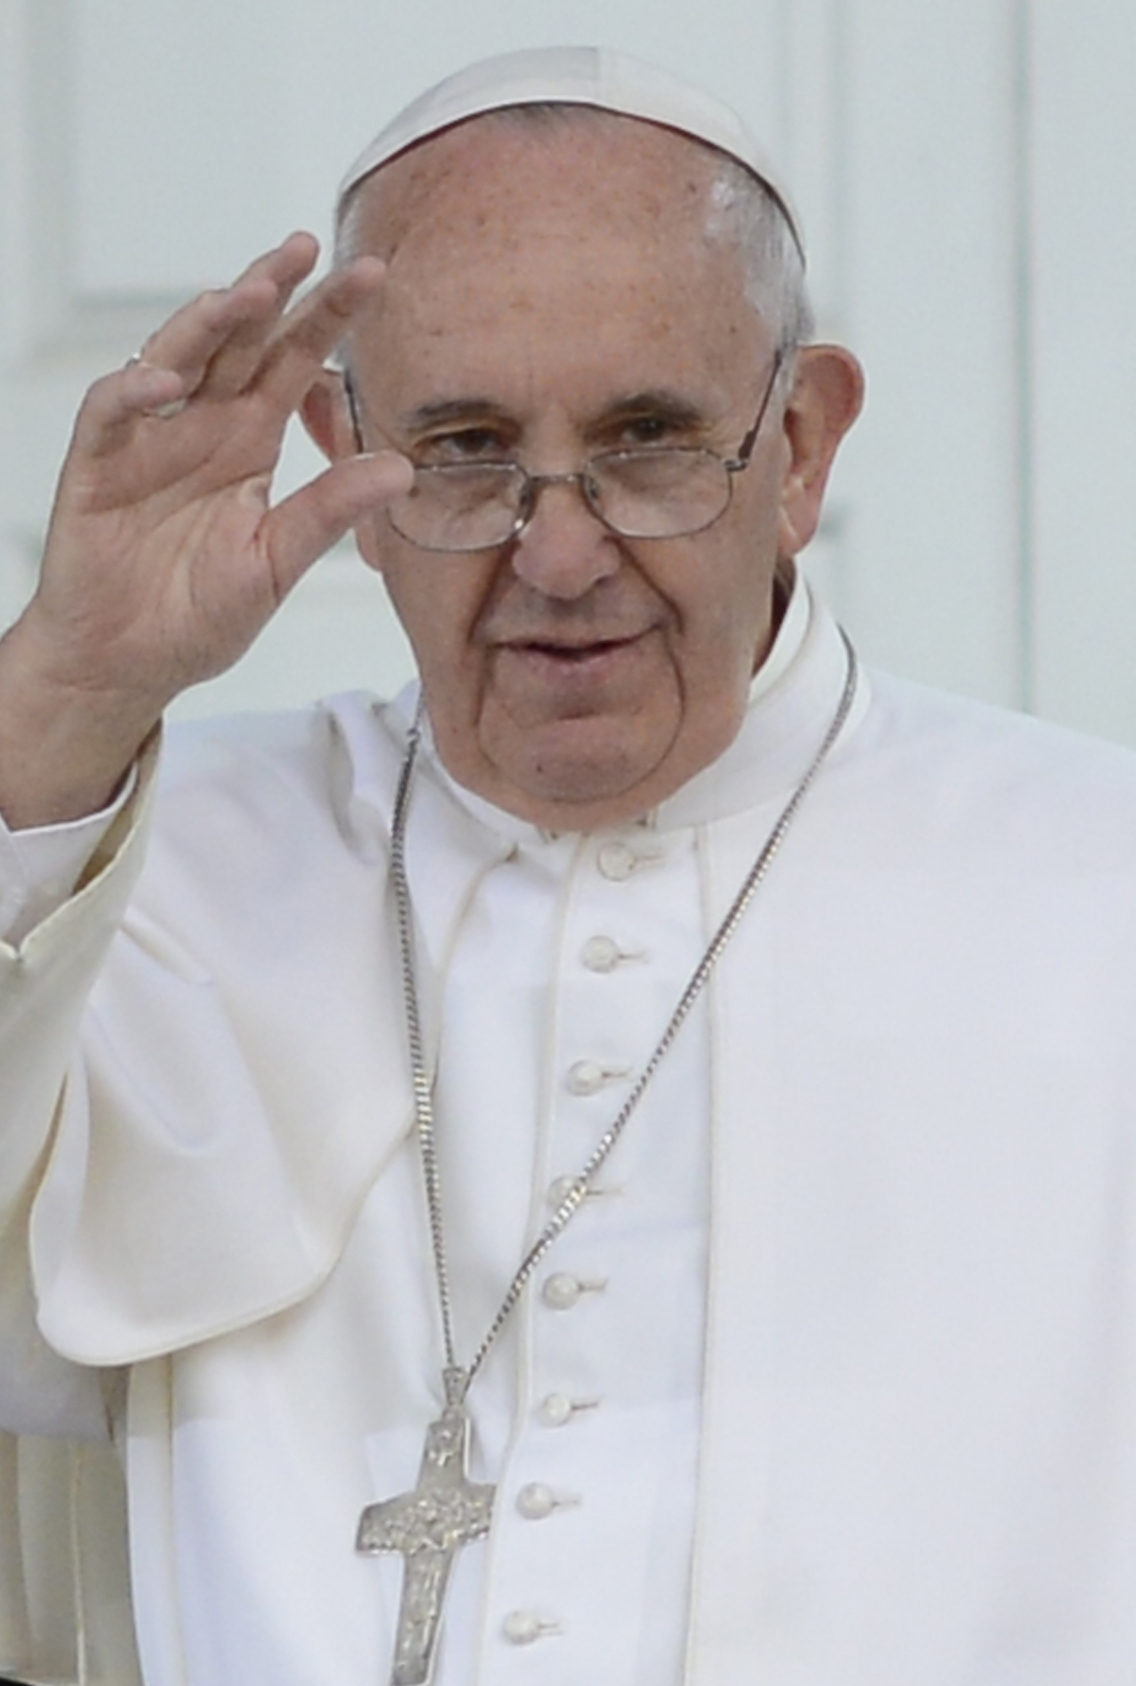 File:Pope Francis Philadelphia 2015 (cropped).jpg - Wikimedia